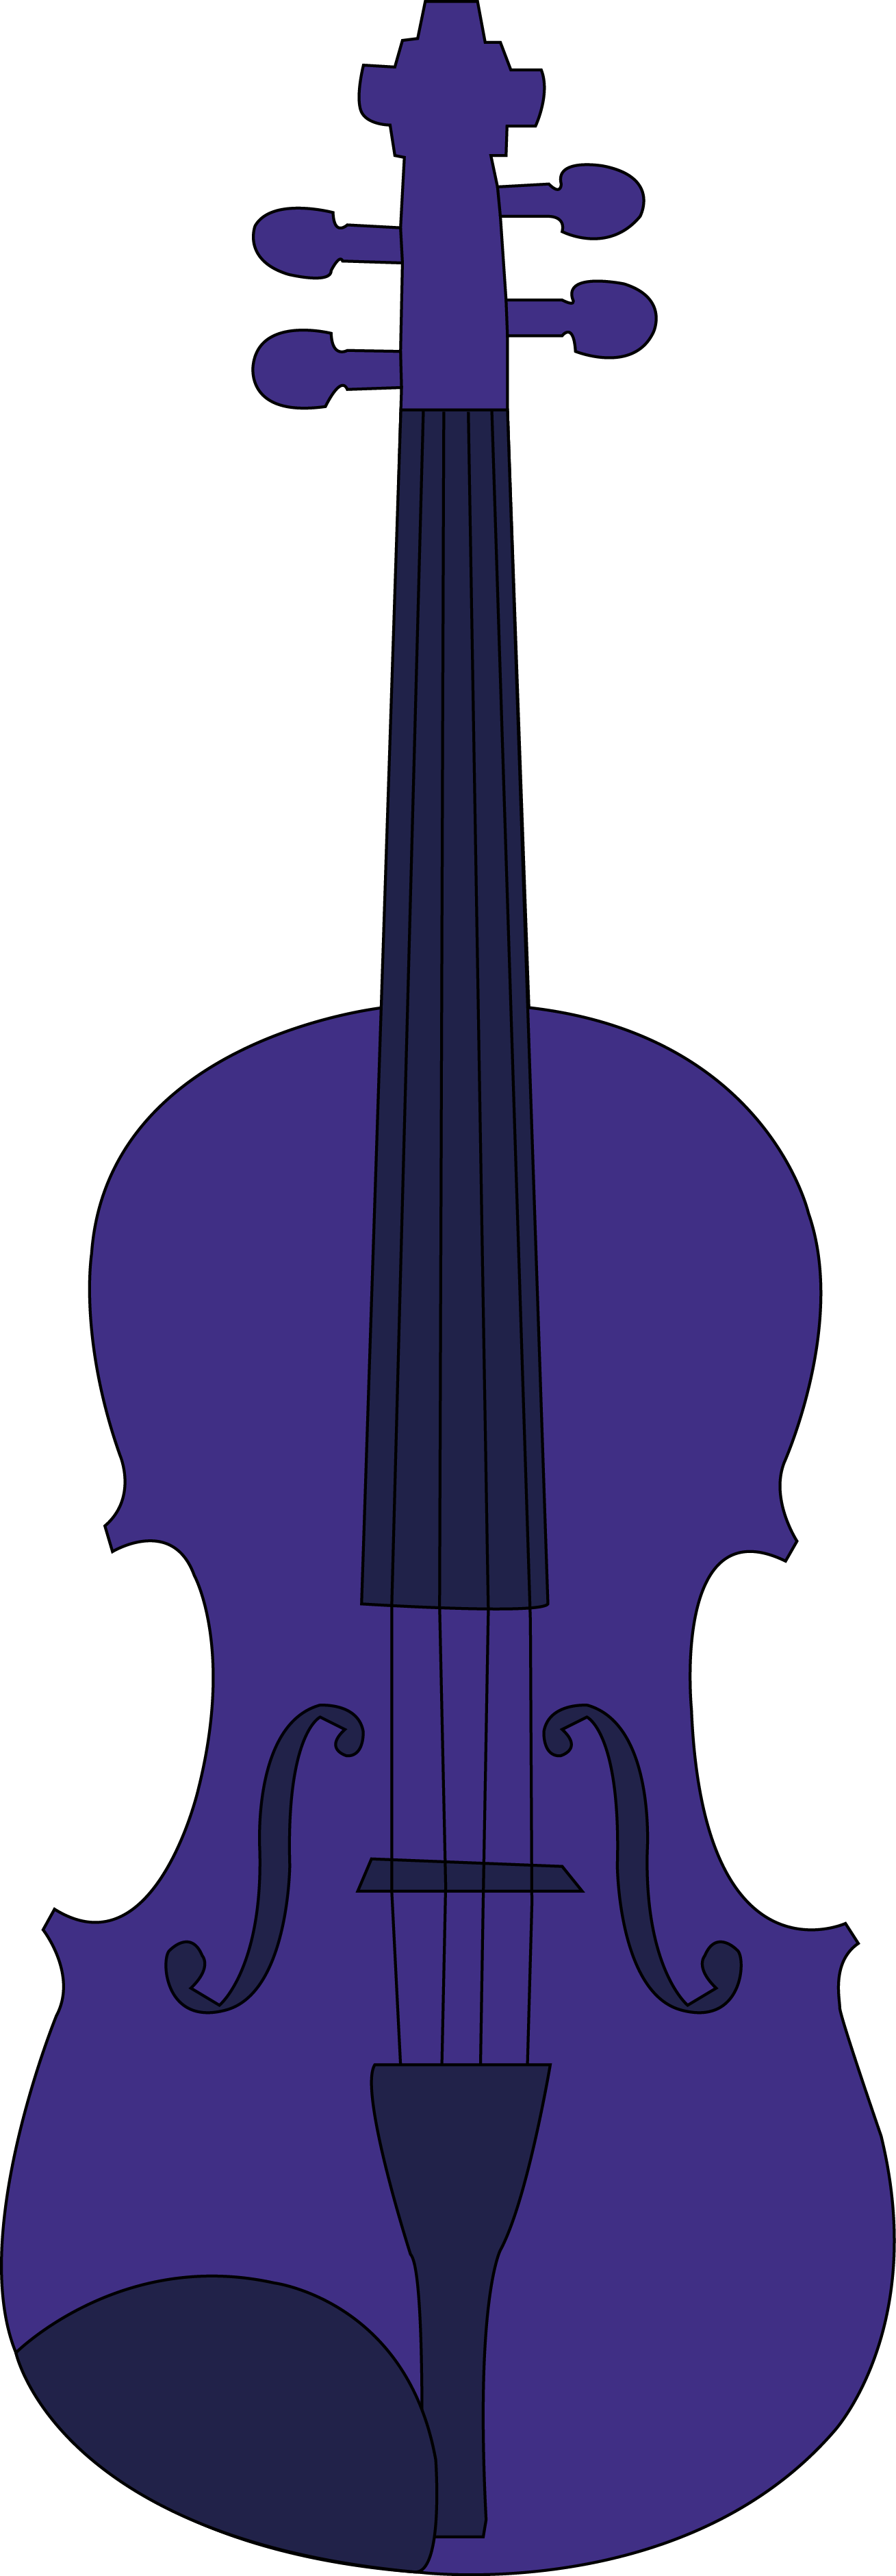 Violin - Golden Ratio In Musical Instruments (1309x3762)